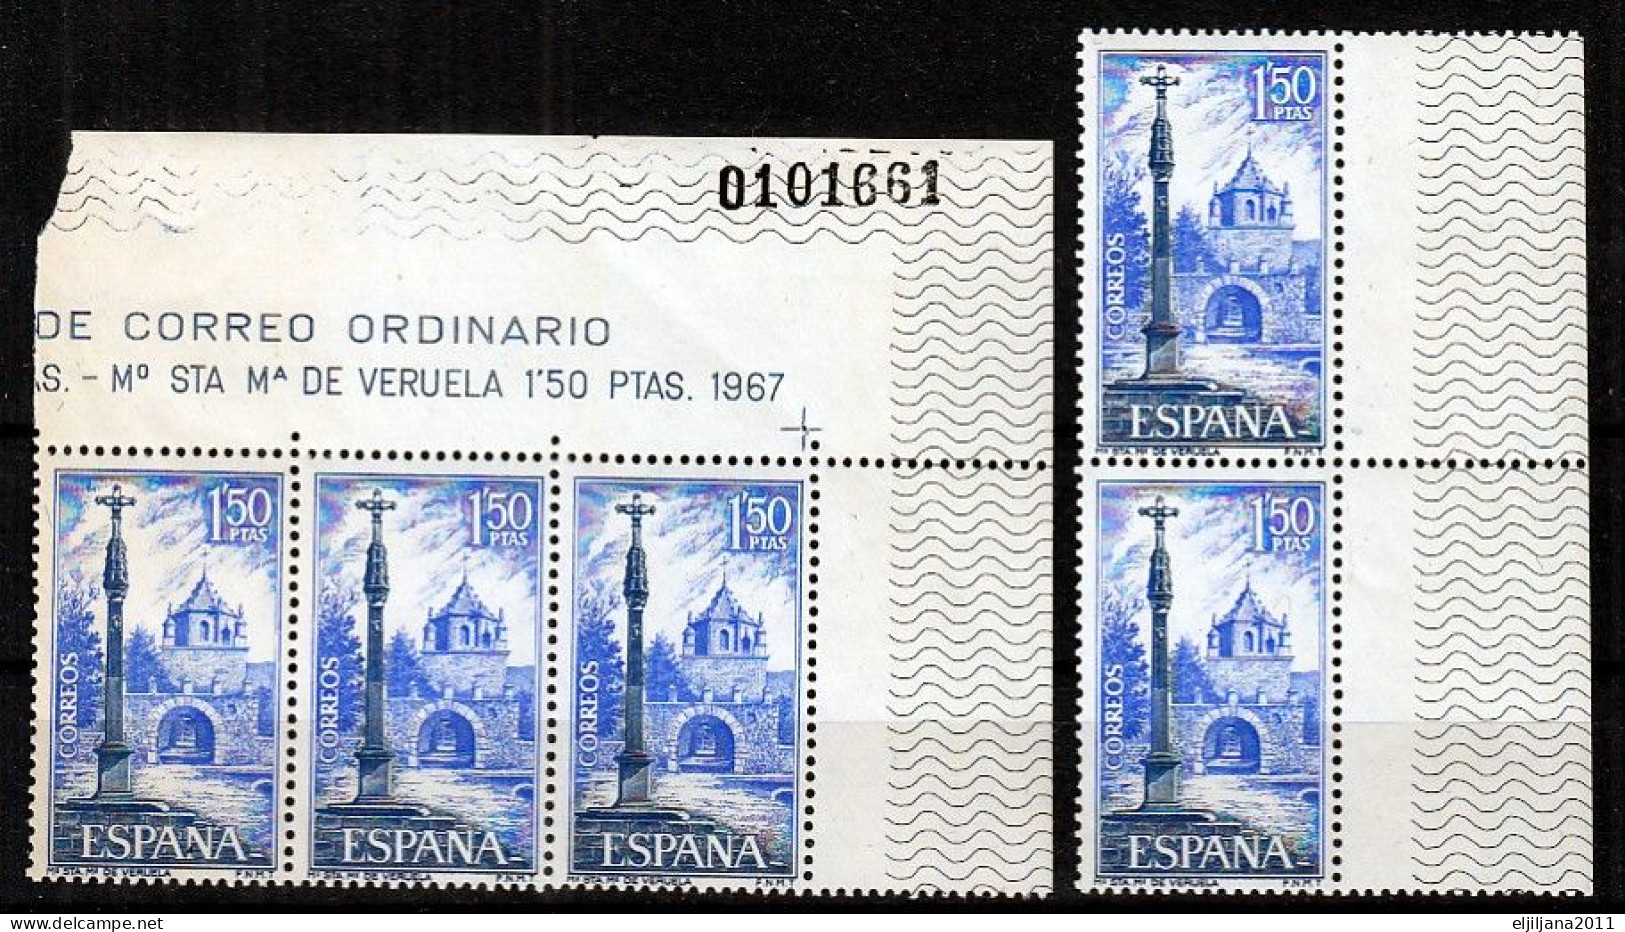 ⁕ SPAIN / ESPANA 1967 ⁕ Monasteries And Abbeys Mi.1728 - 1730 X 5 ⁕ MNH - See Scan - Neufs